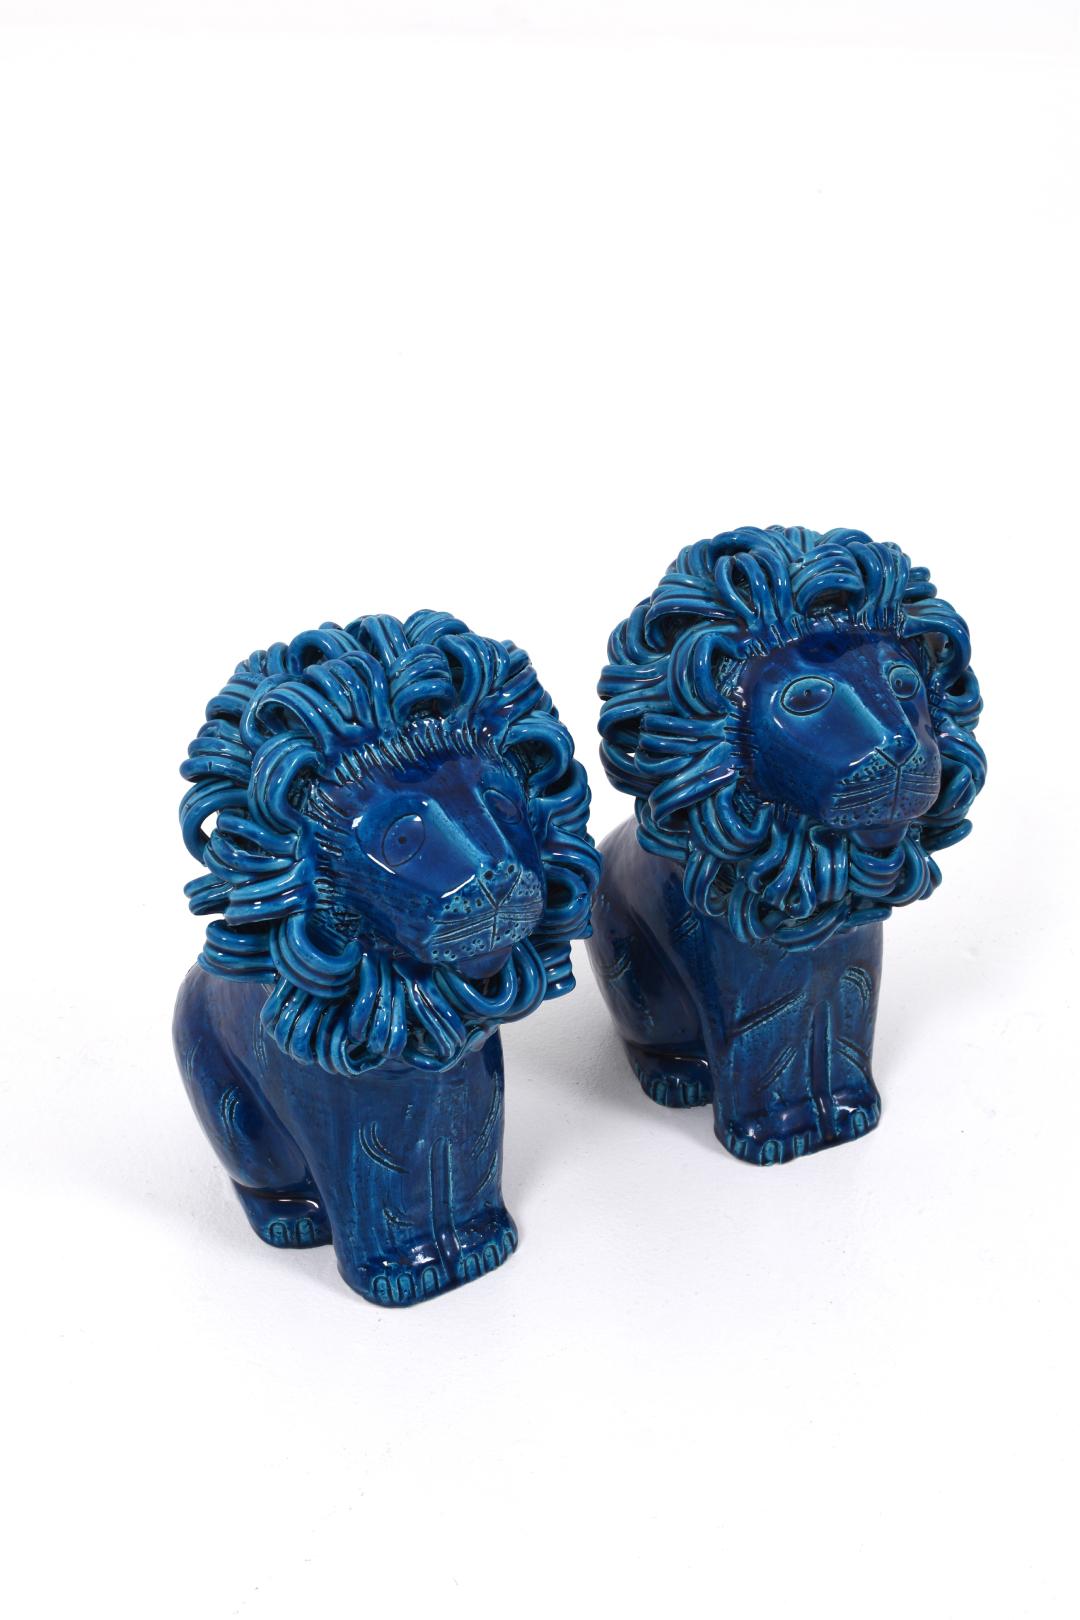 Rimini Blue Lions by Aldo Londi for Bitossi, Italy, Set of 2 1